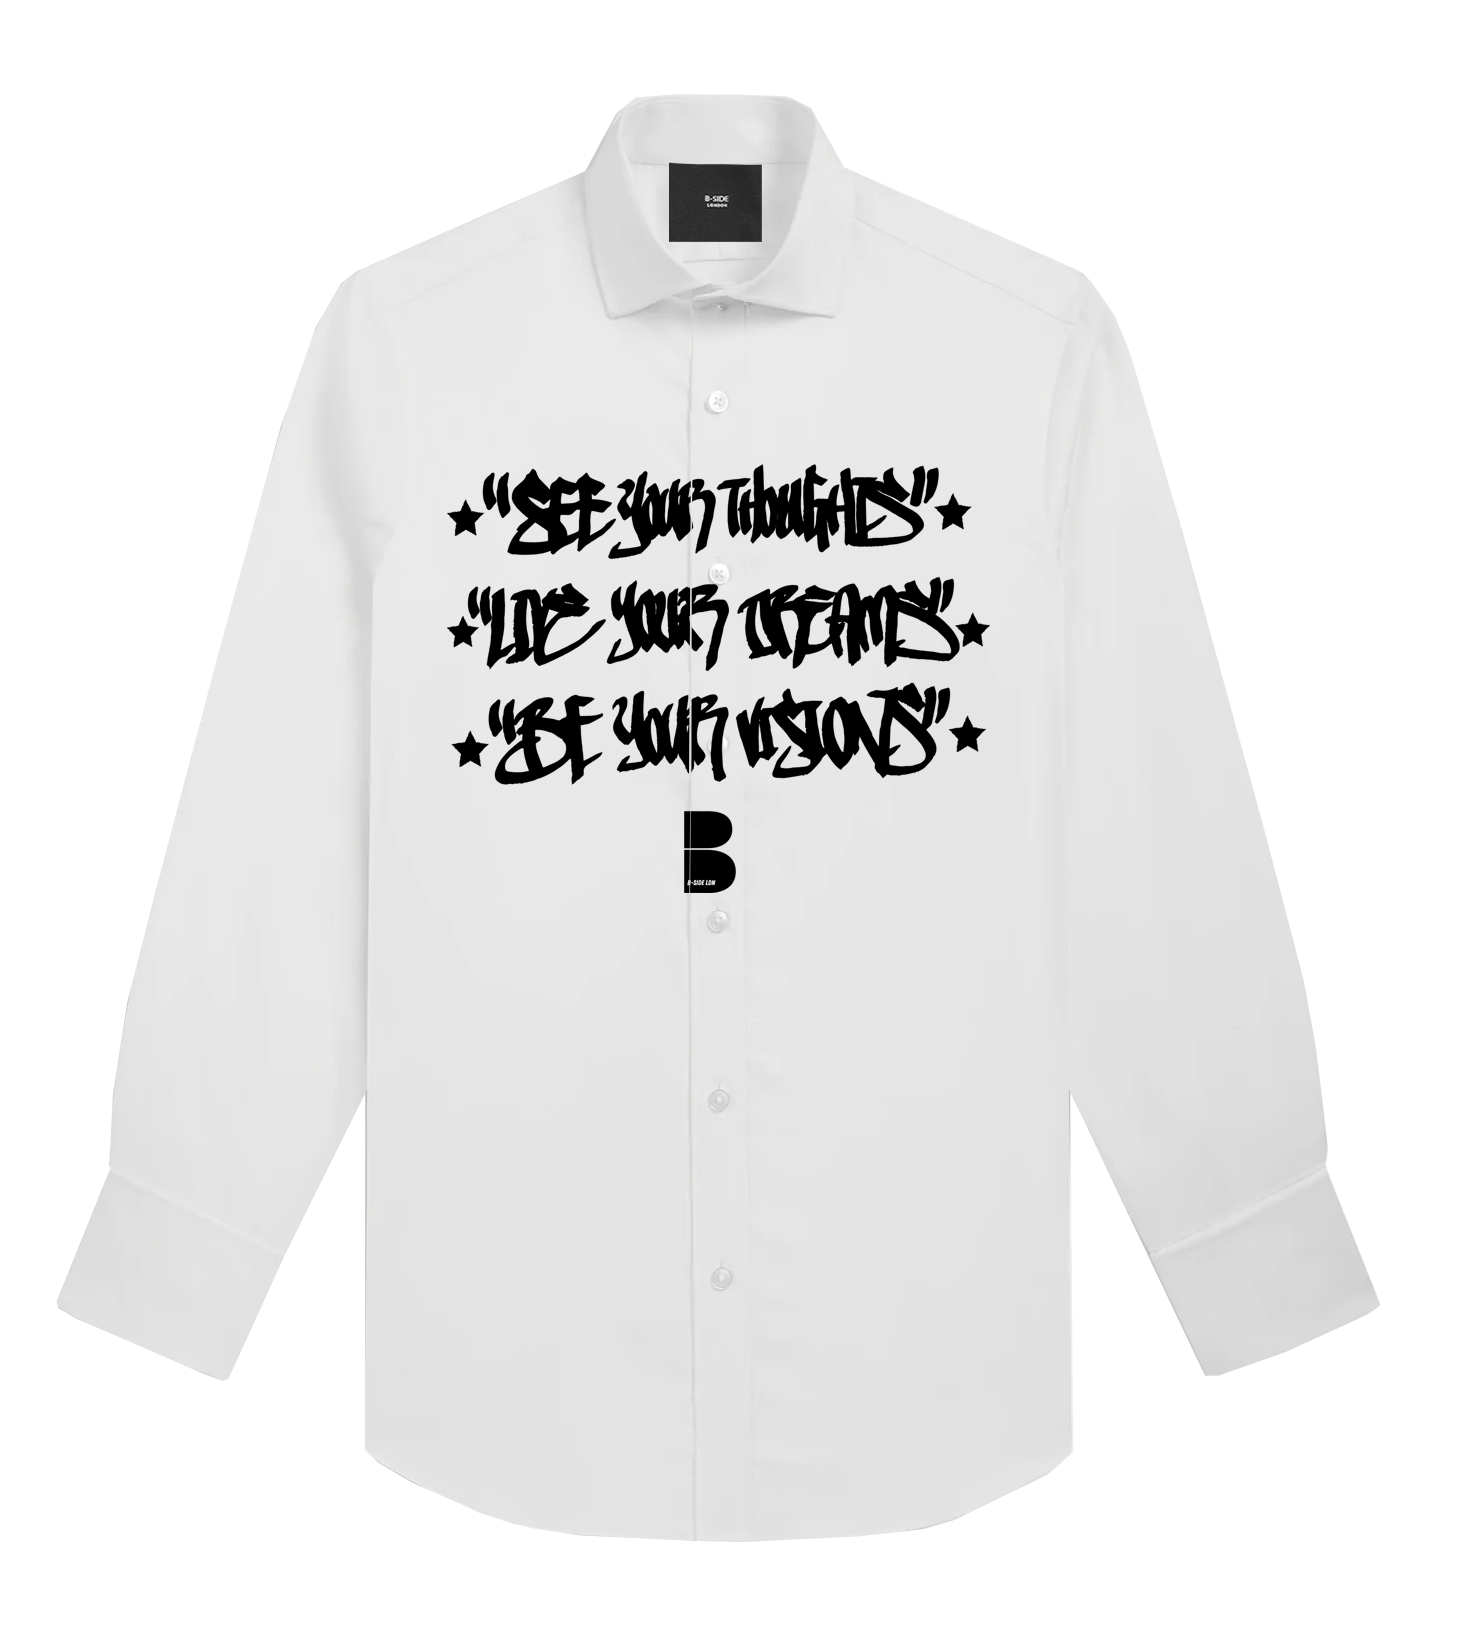 White Second Life Shirt Volume 2 - Black Print